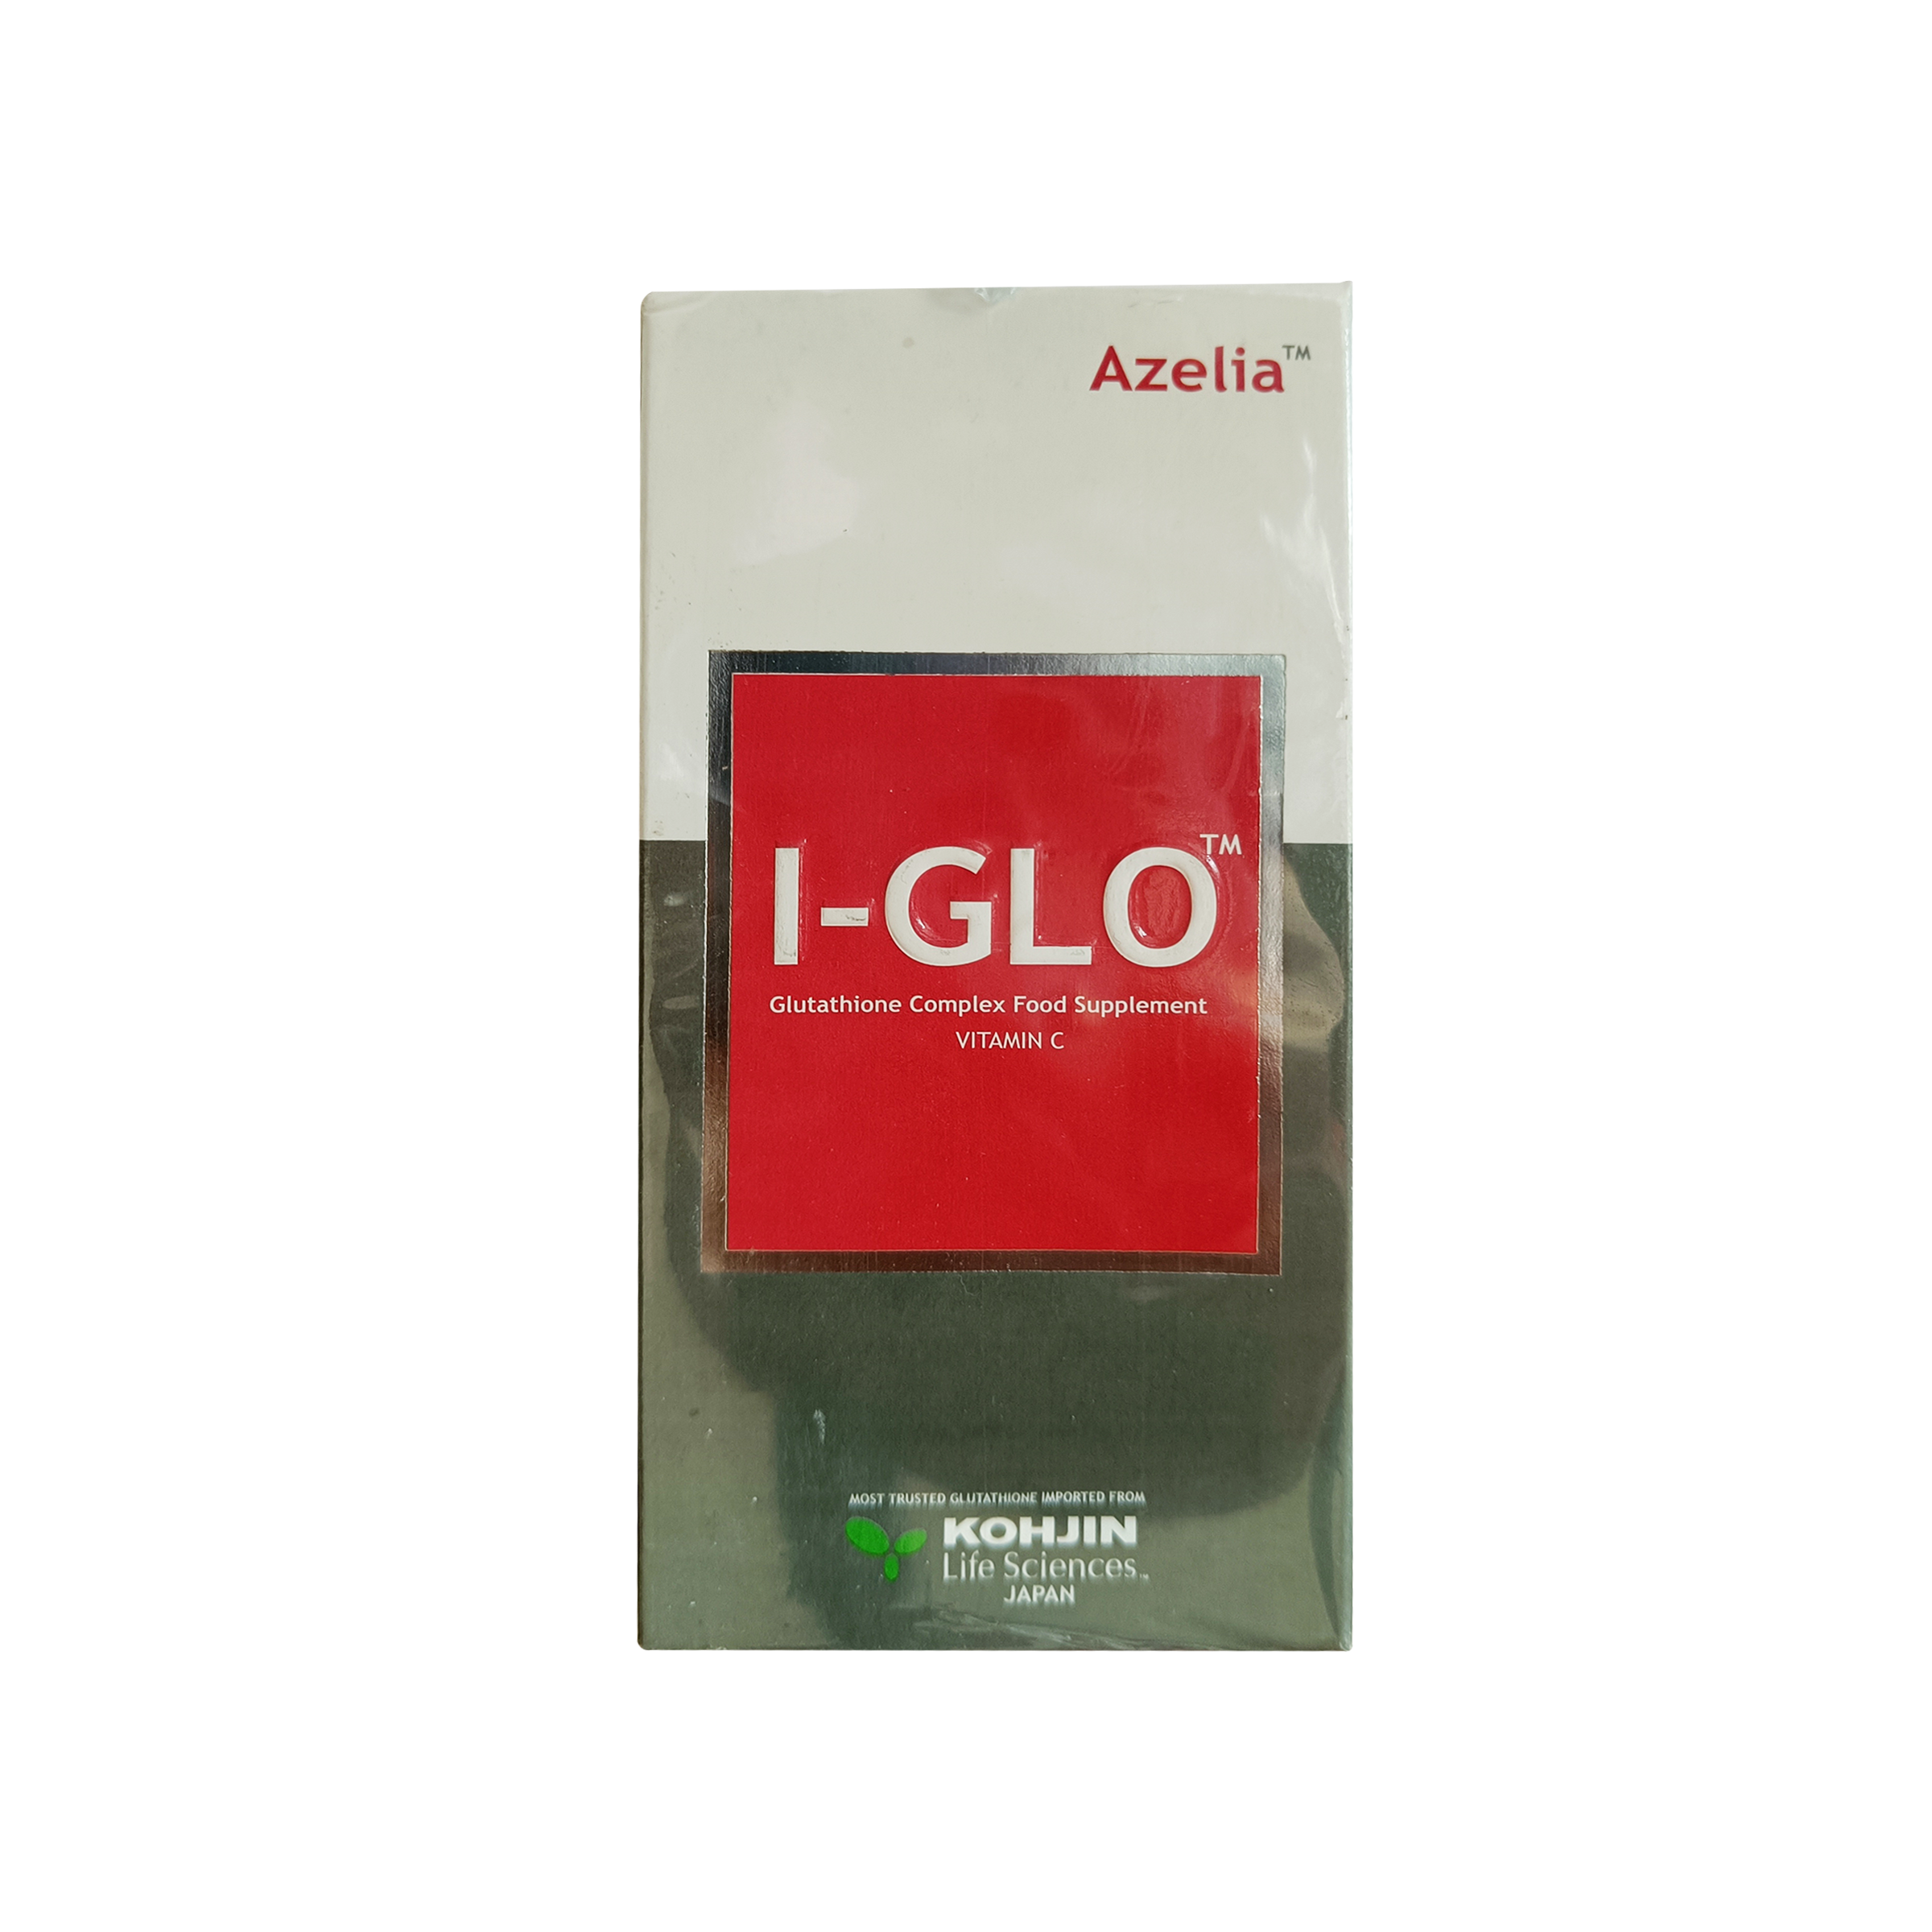 Azelia I-GLO Tablet- The Whitening Agent